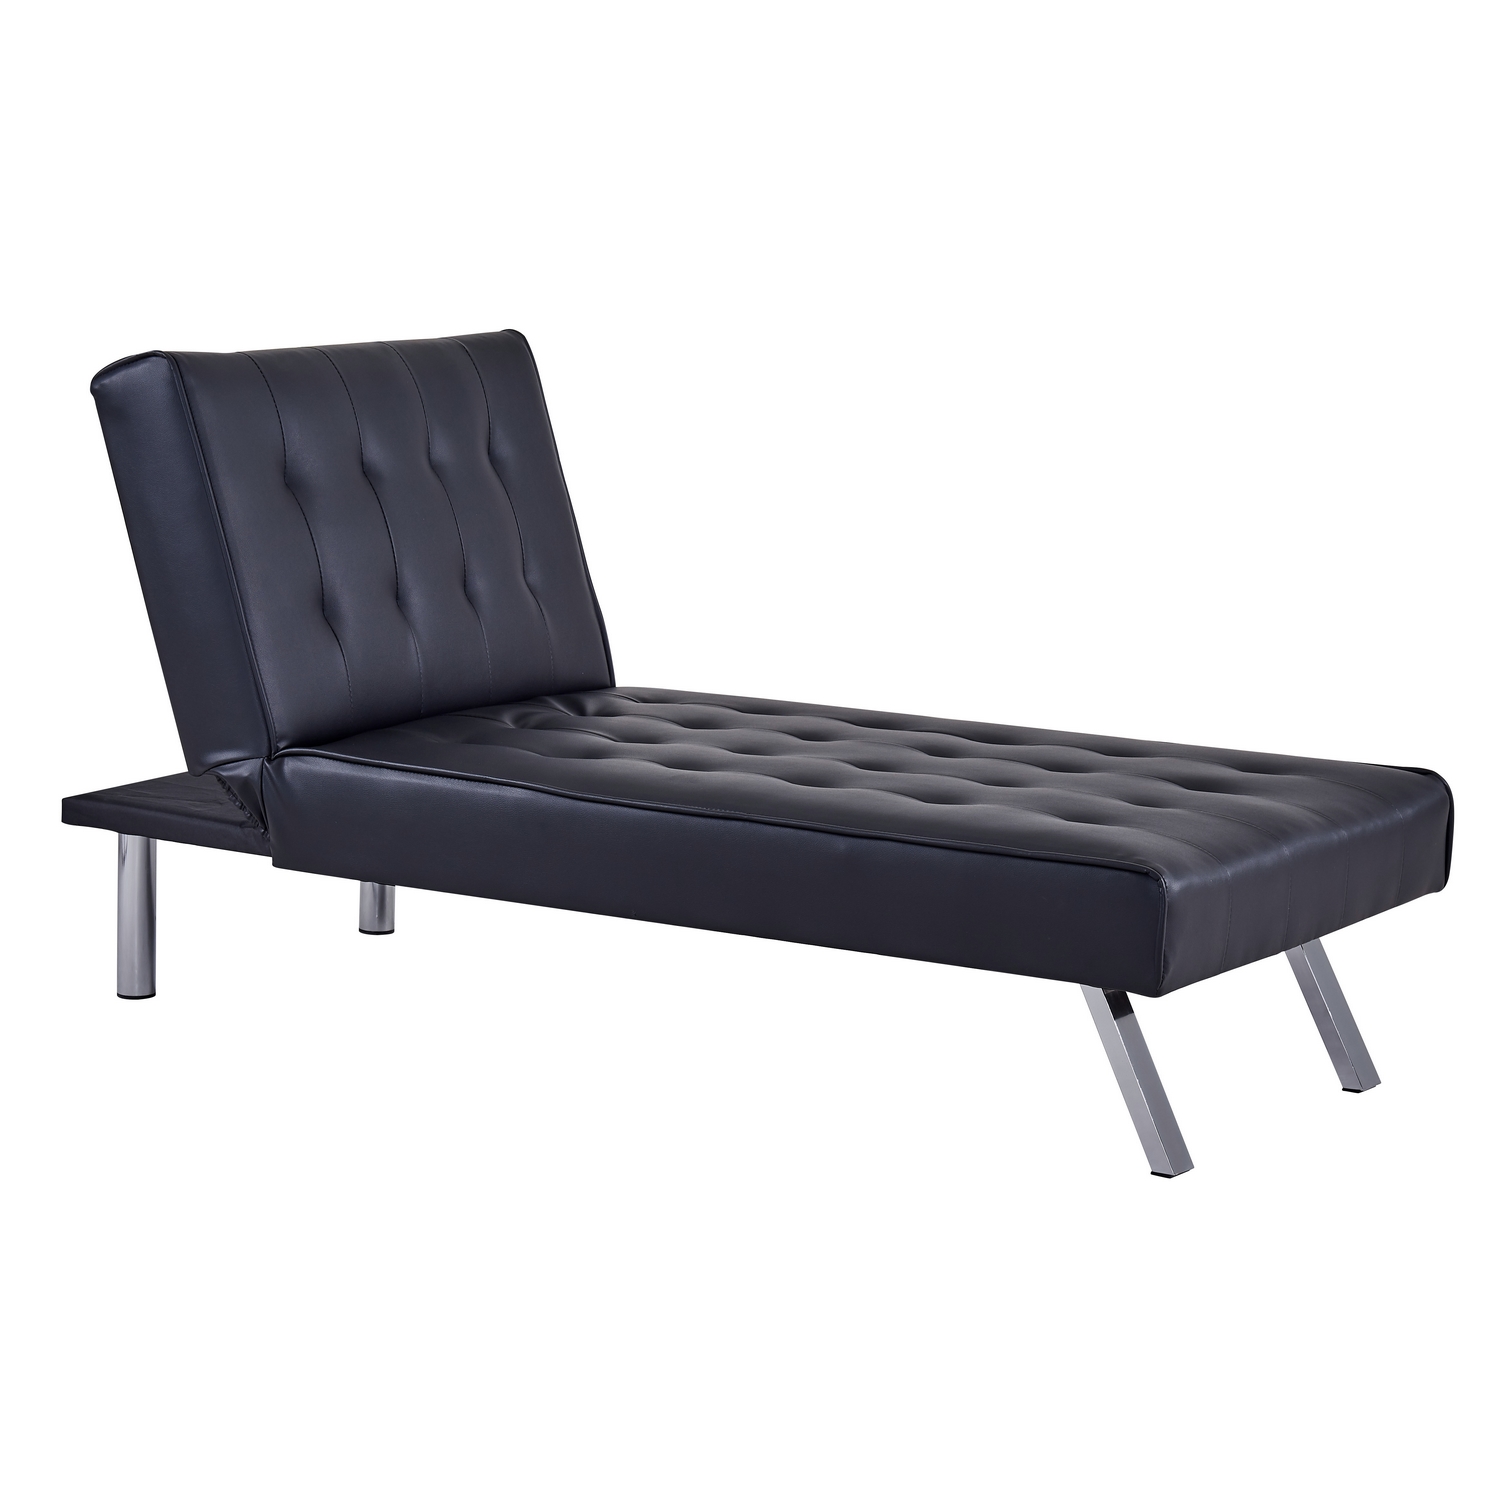 Homegear Furniture Recliner Chaise Lounge Single Sleeper Futon